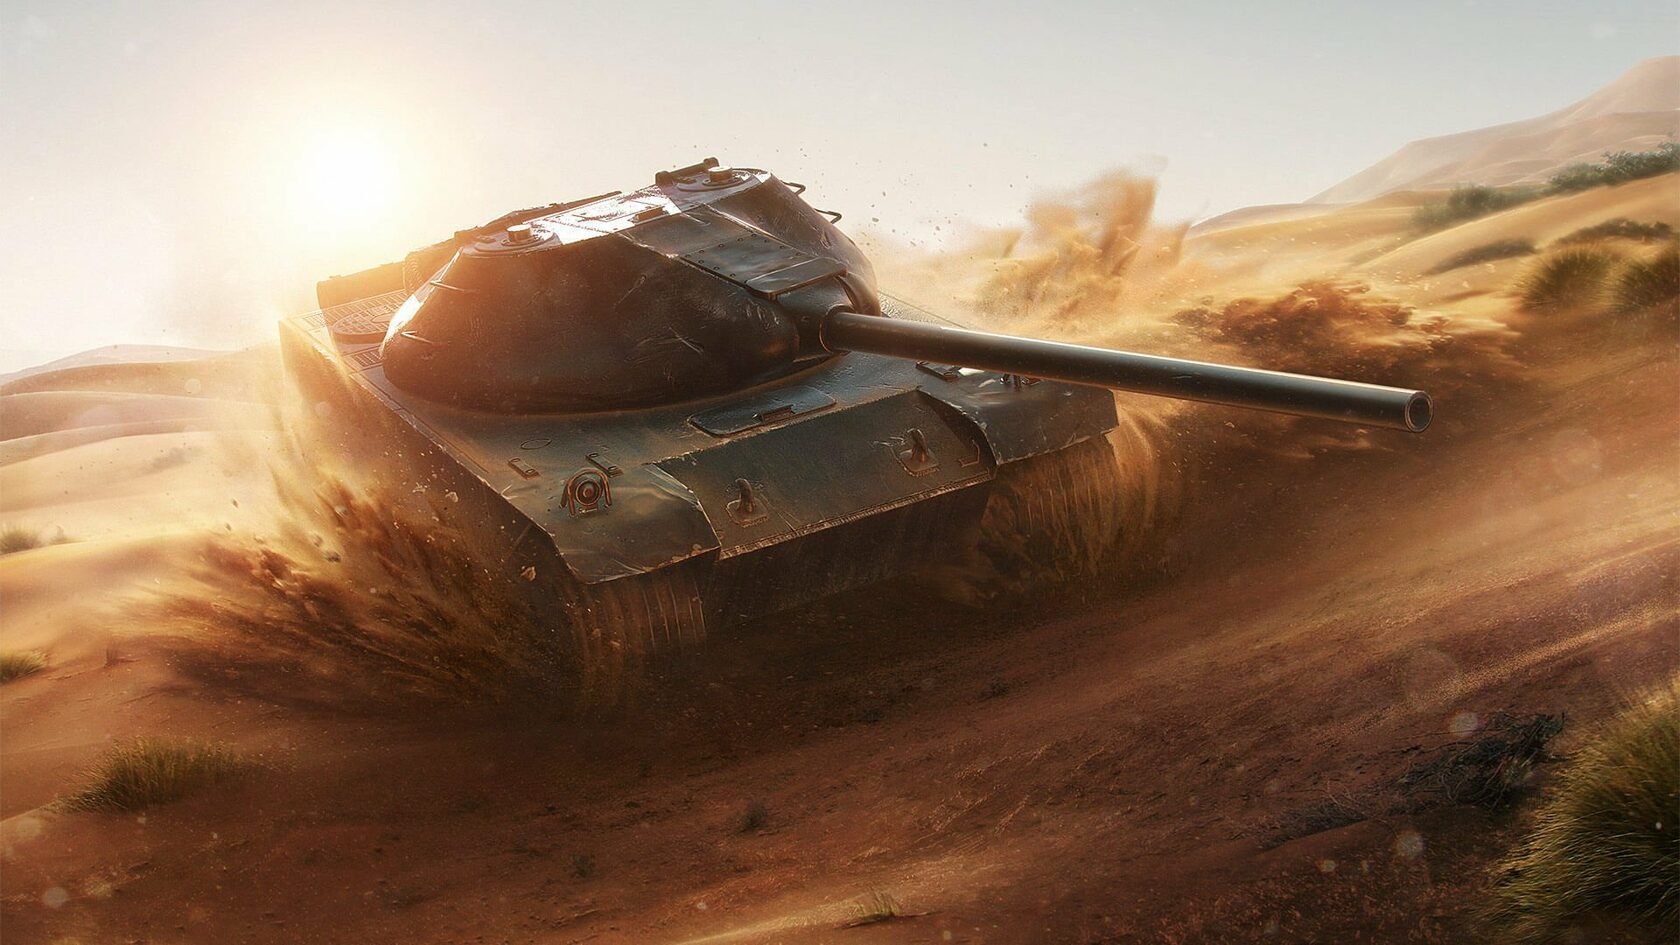 Ударник мир танков. К91 блиц. К91 World of Tanks Blitz. К-91 танк World of Tanks. К-91 WOT Blitz.